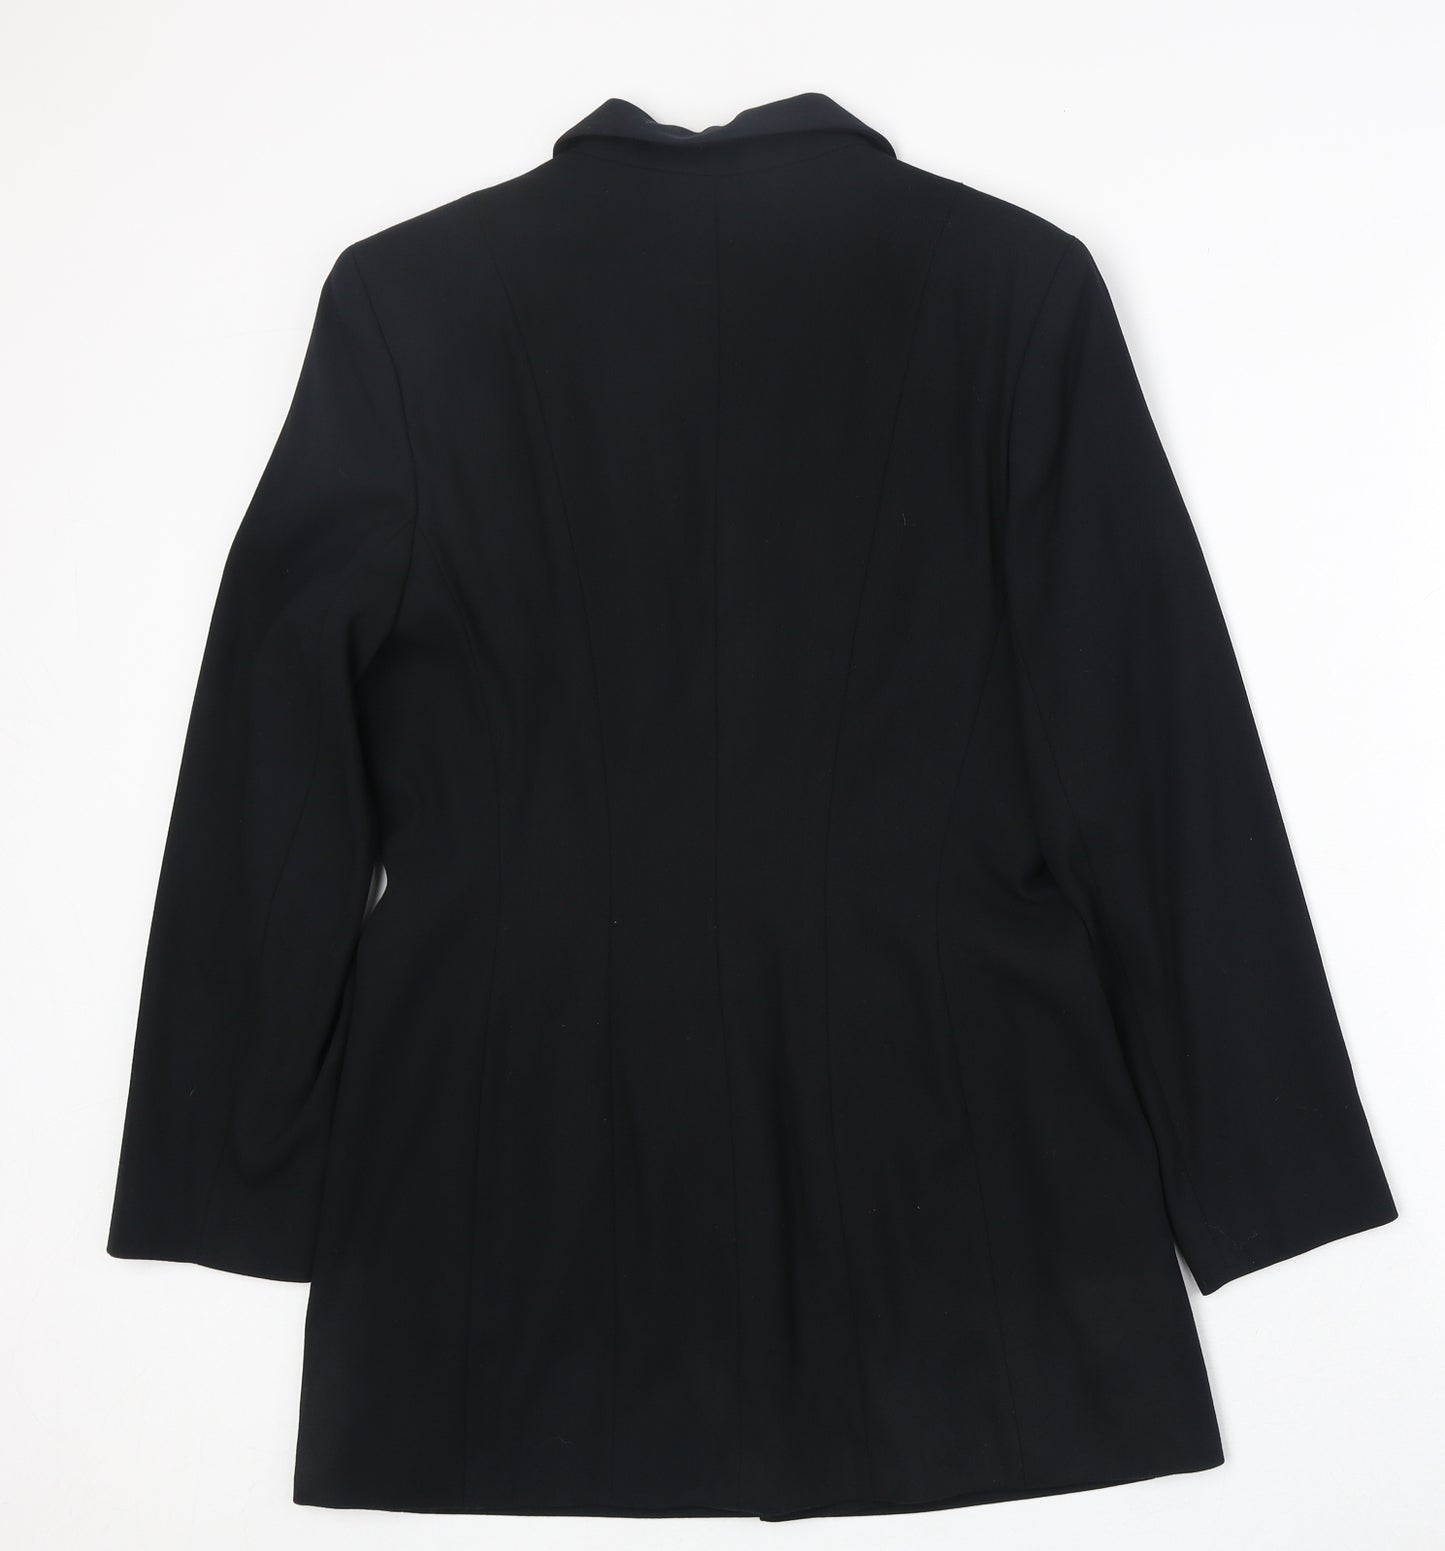 Richards Womens Black Polyester Jacket Blazer Size 12 Button